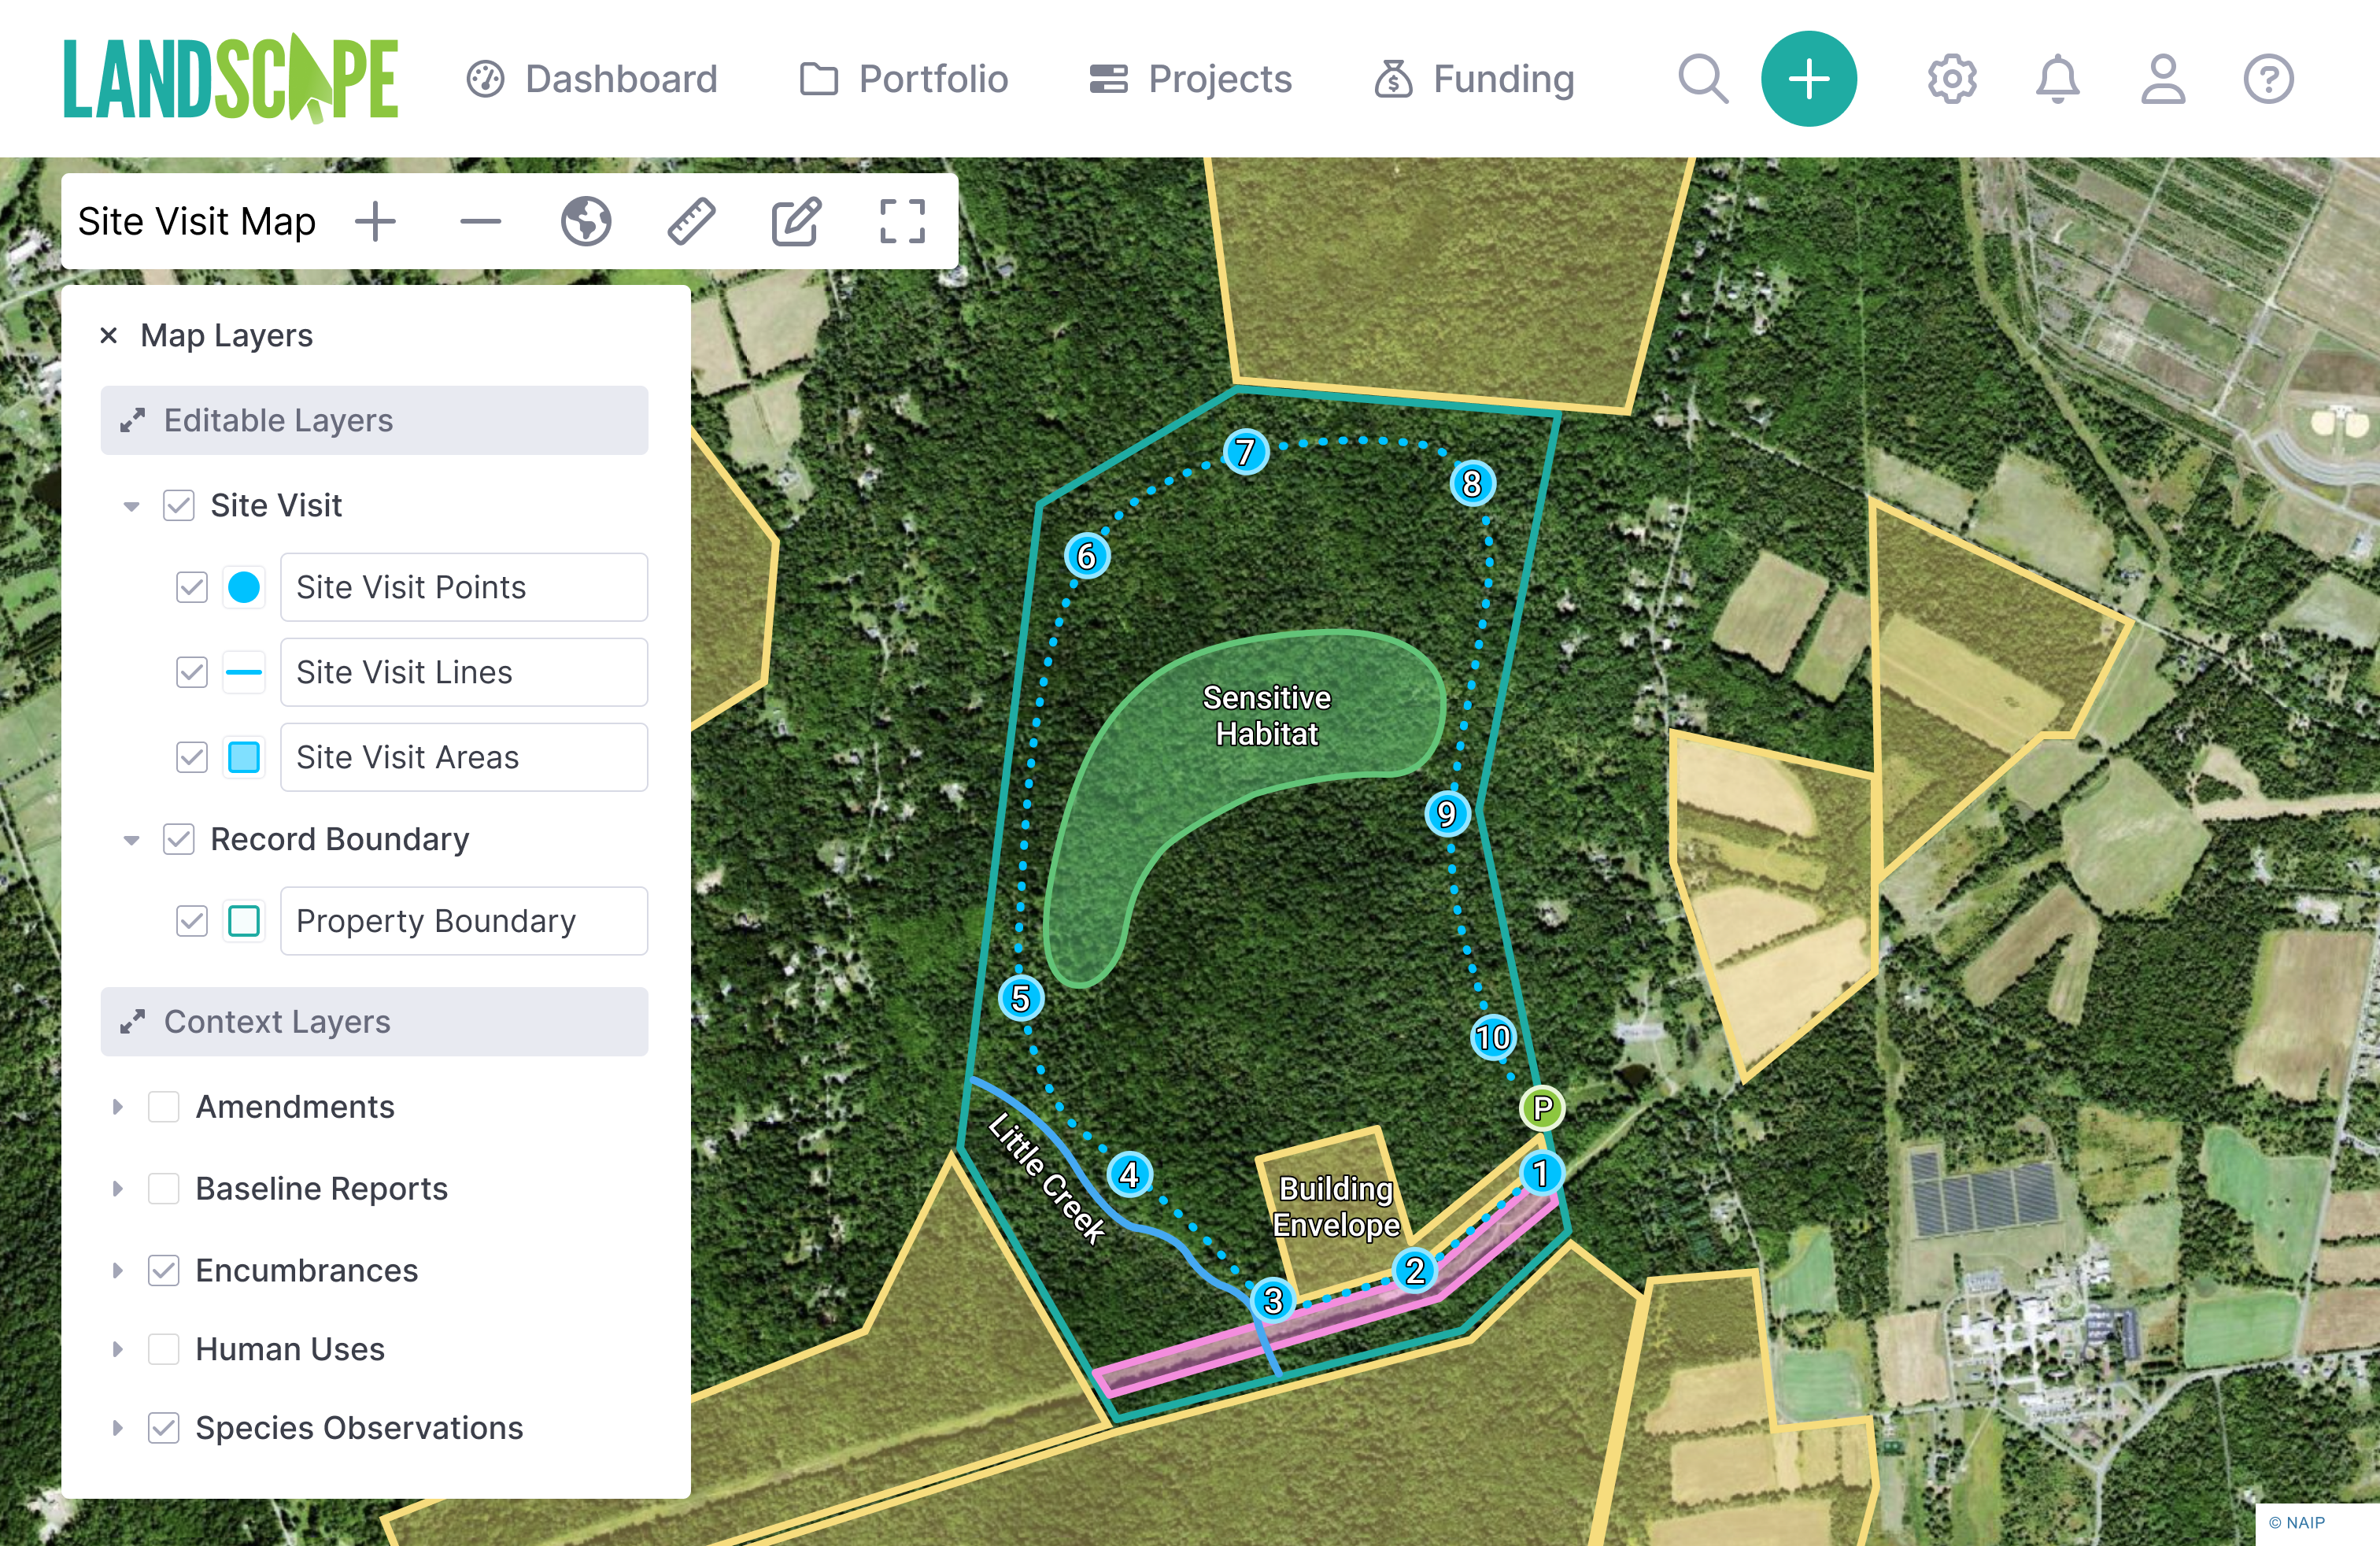 Landscape land conservation software full screen map